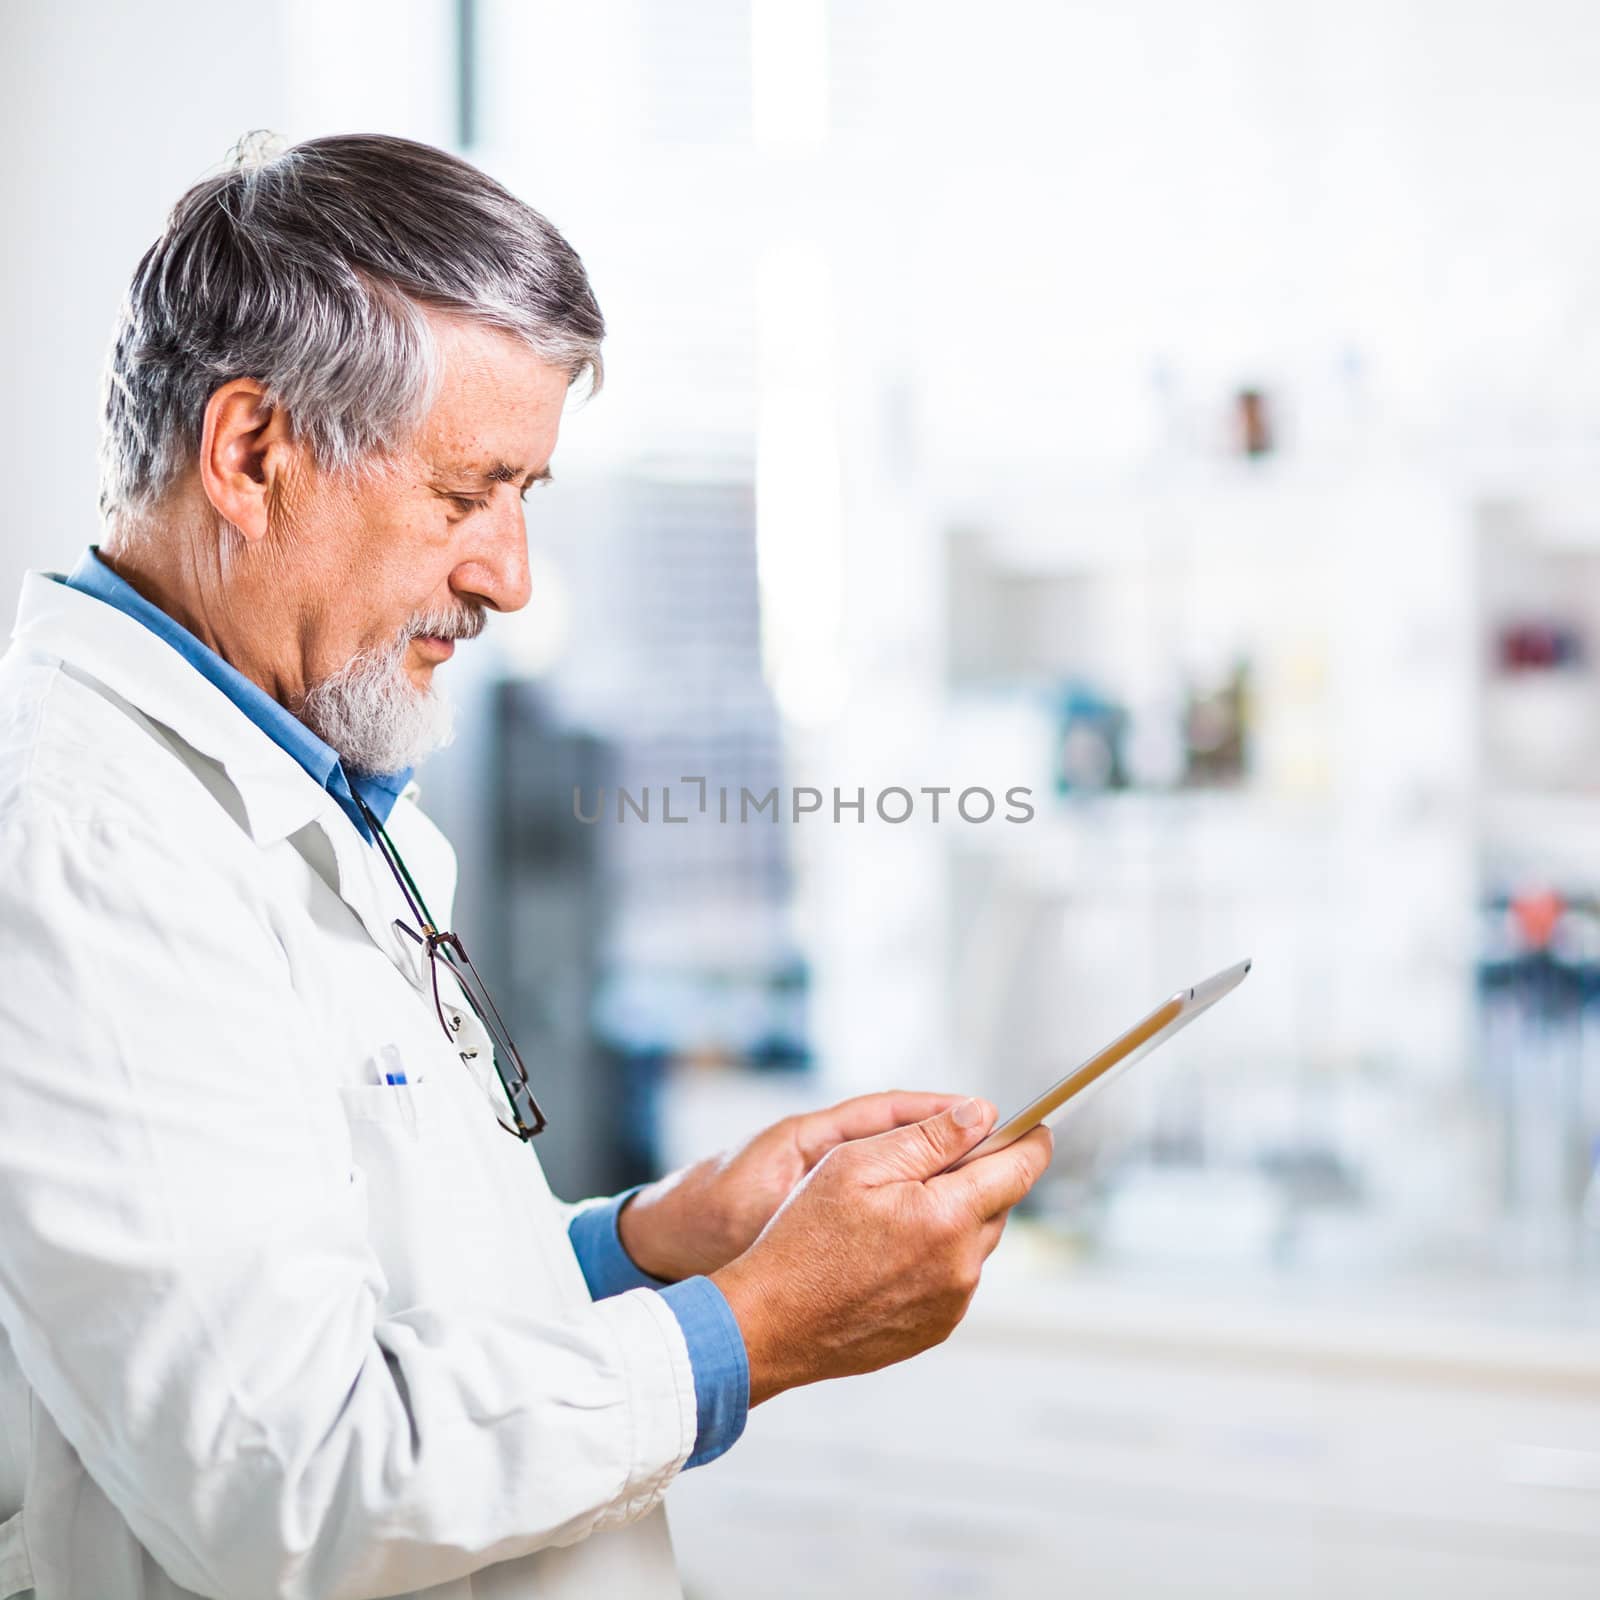 Senior doctor/scientist using his tablet computer at work by viktor_cap